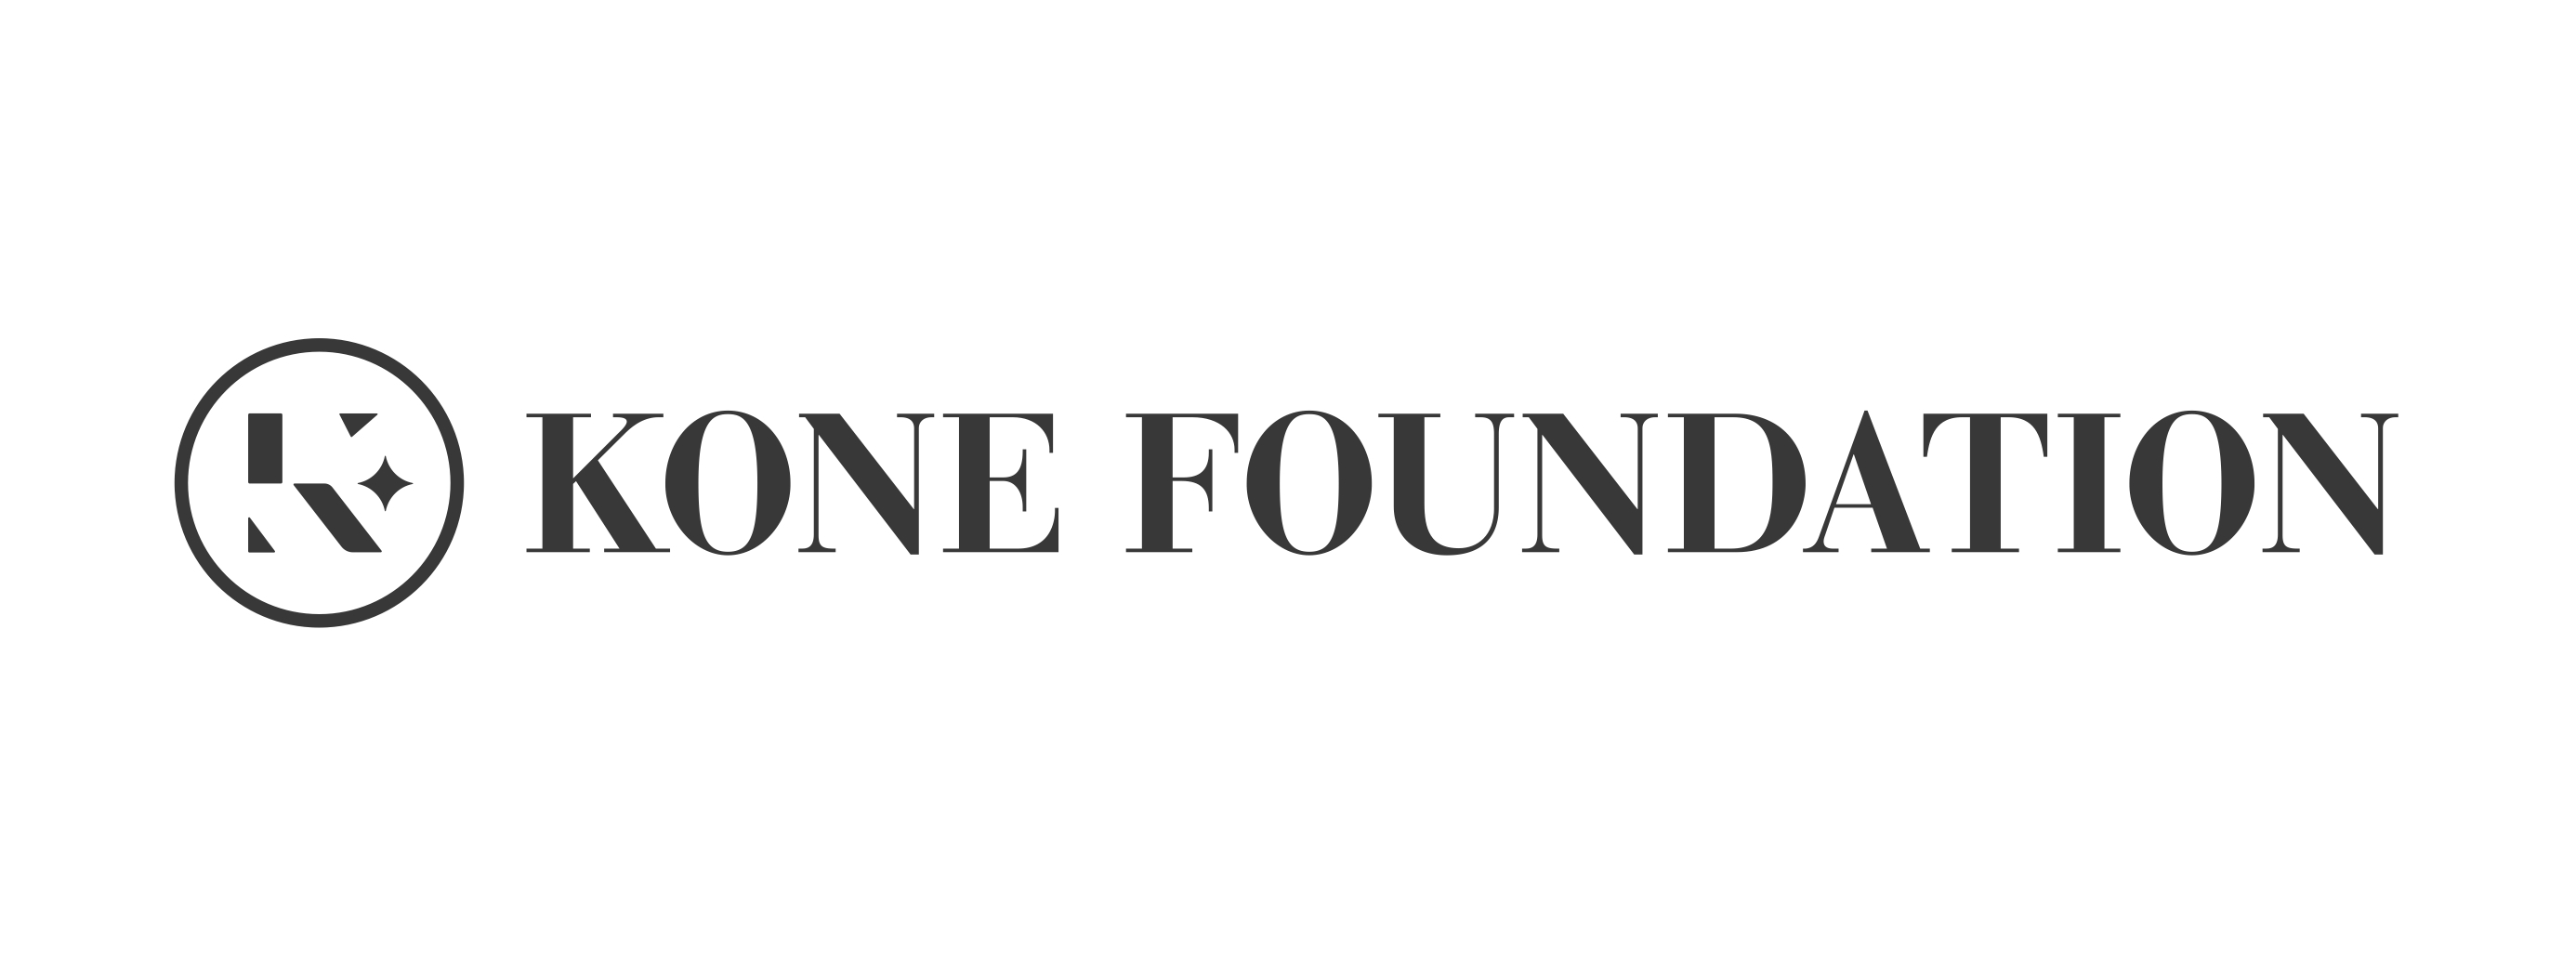 Kone Foundation